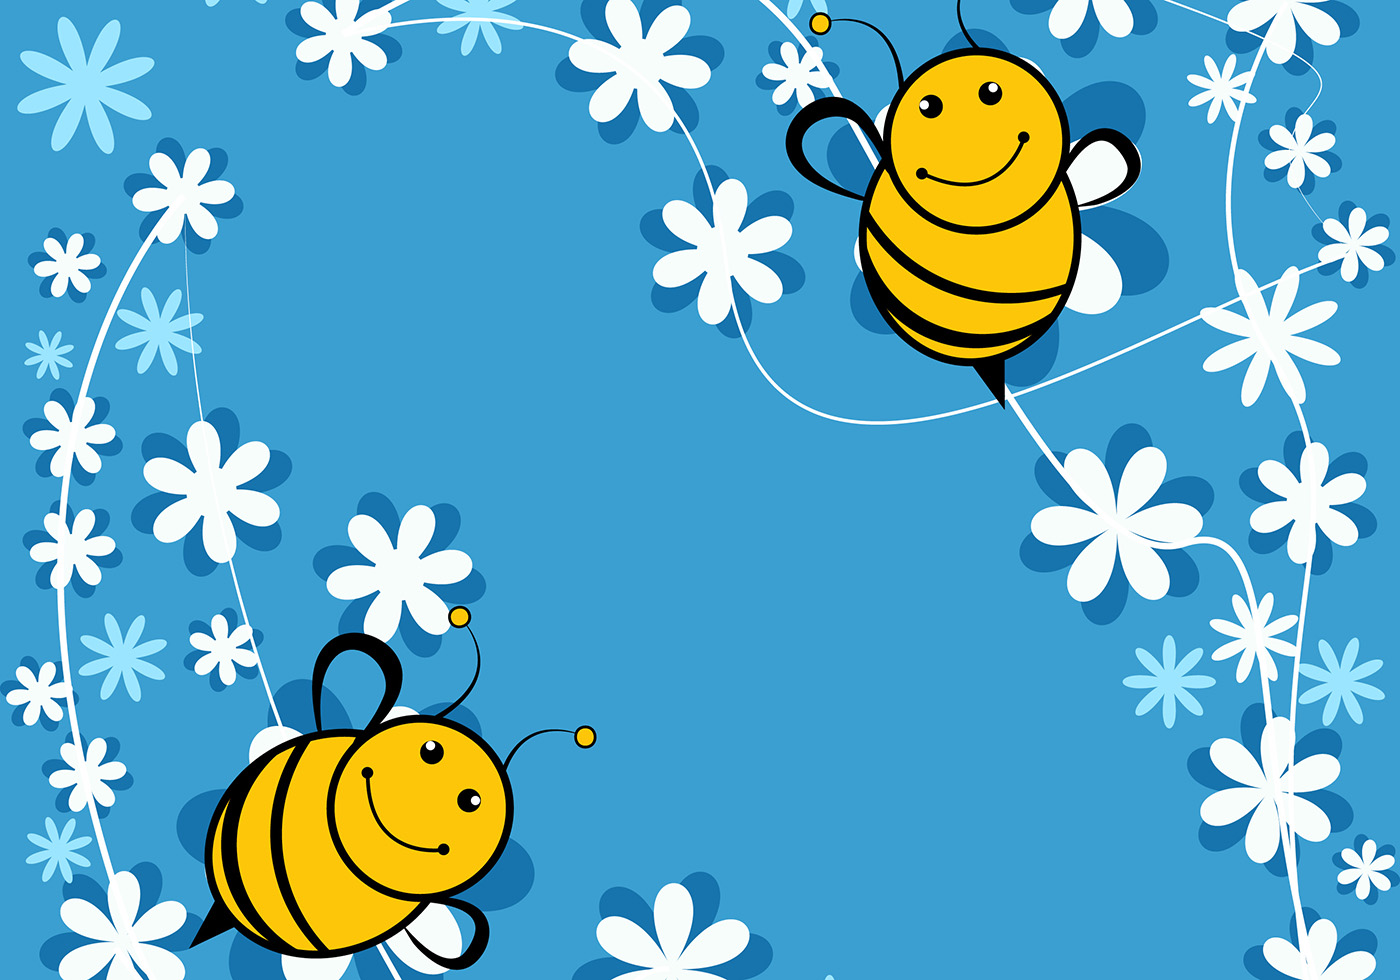 Bee Cartoon Image Background